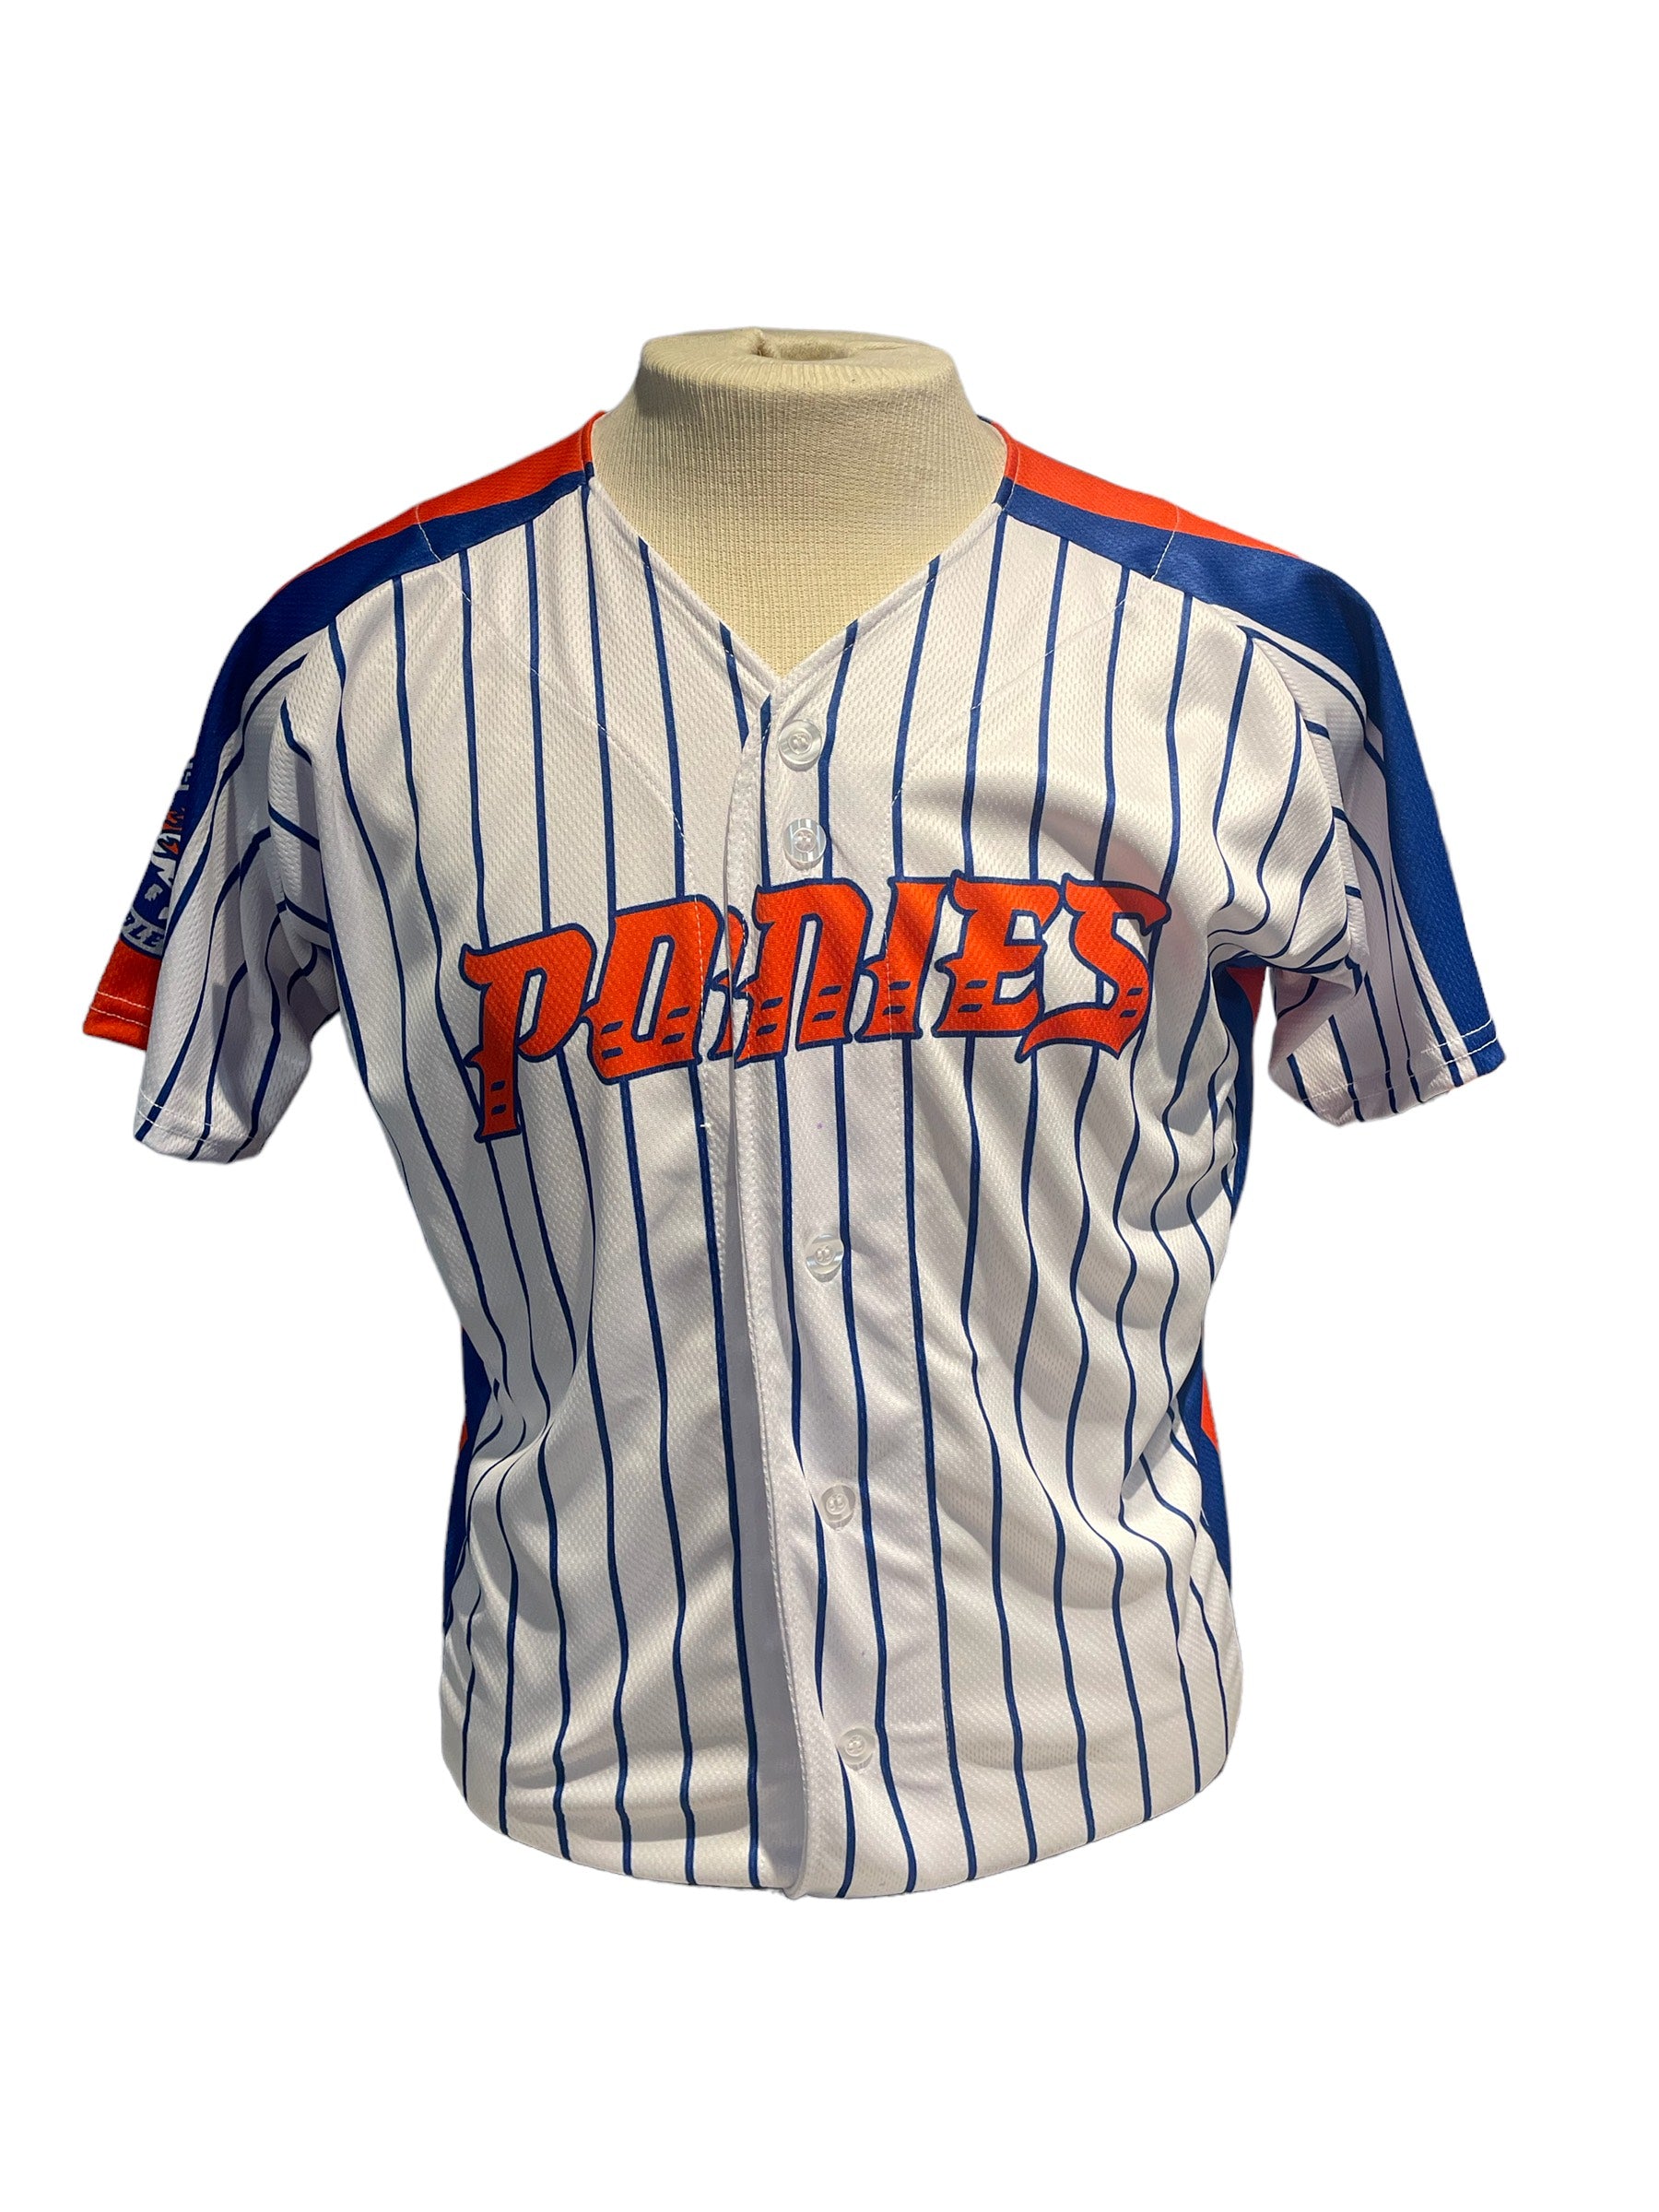 Official New York Mets Gear, Mets Jerseys, Store, New York Pro Shop, Apparel